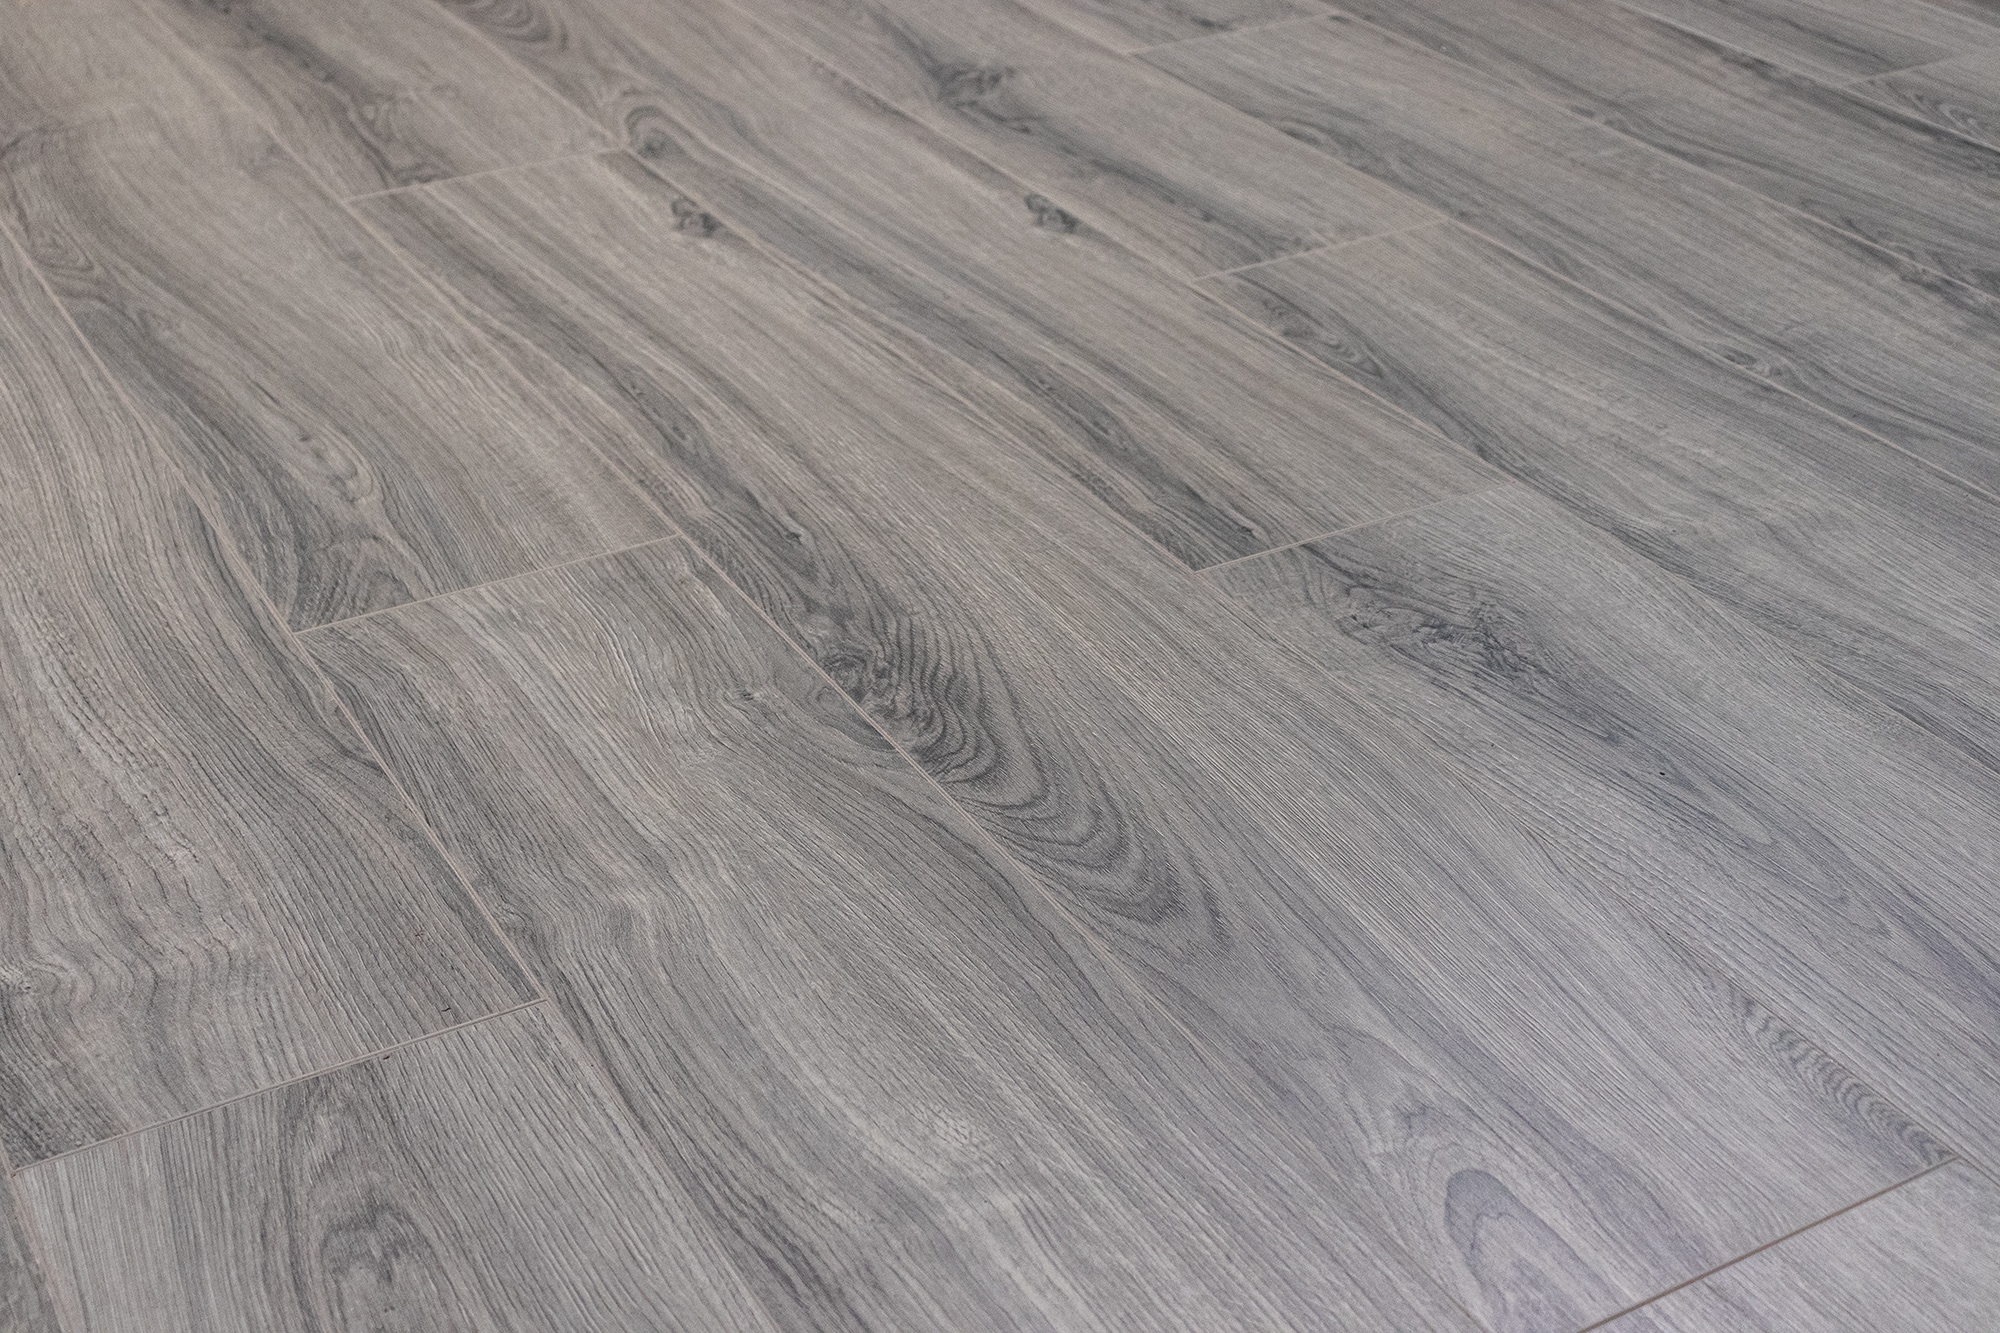 Gray Laminate Flooring at Lowes.com